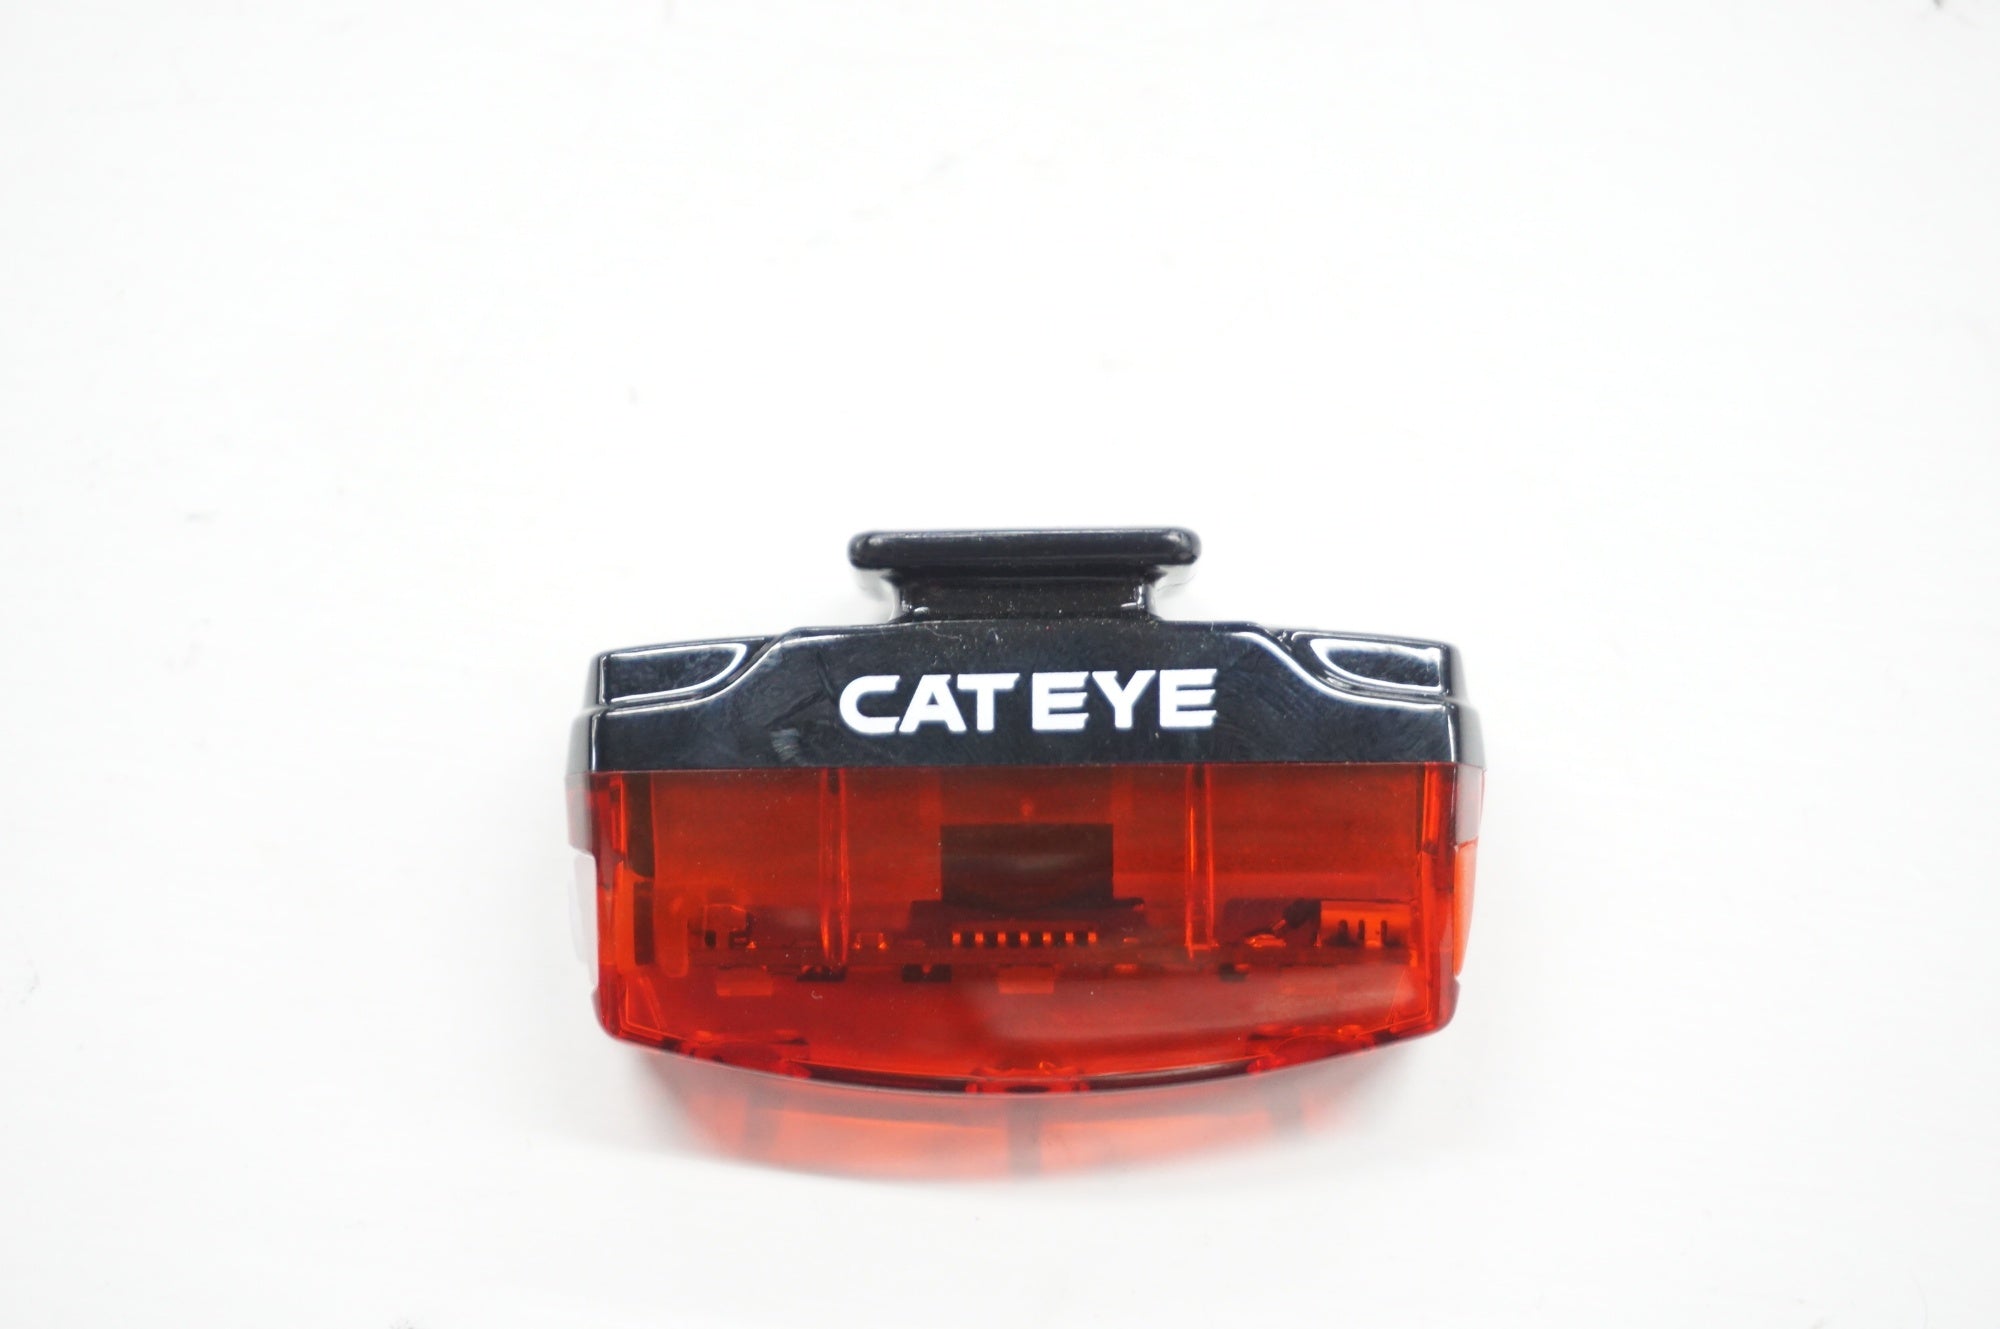 CATEYE 「キャットアイ」 TL-LD620 リアライト / 阪急塚口店